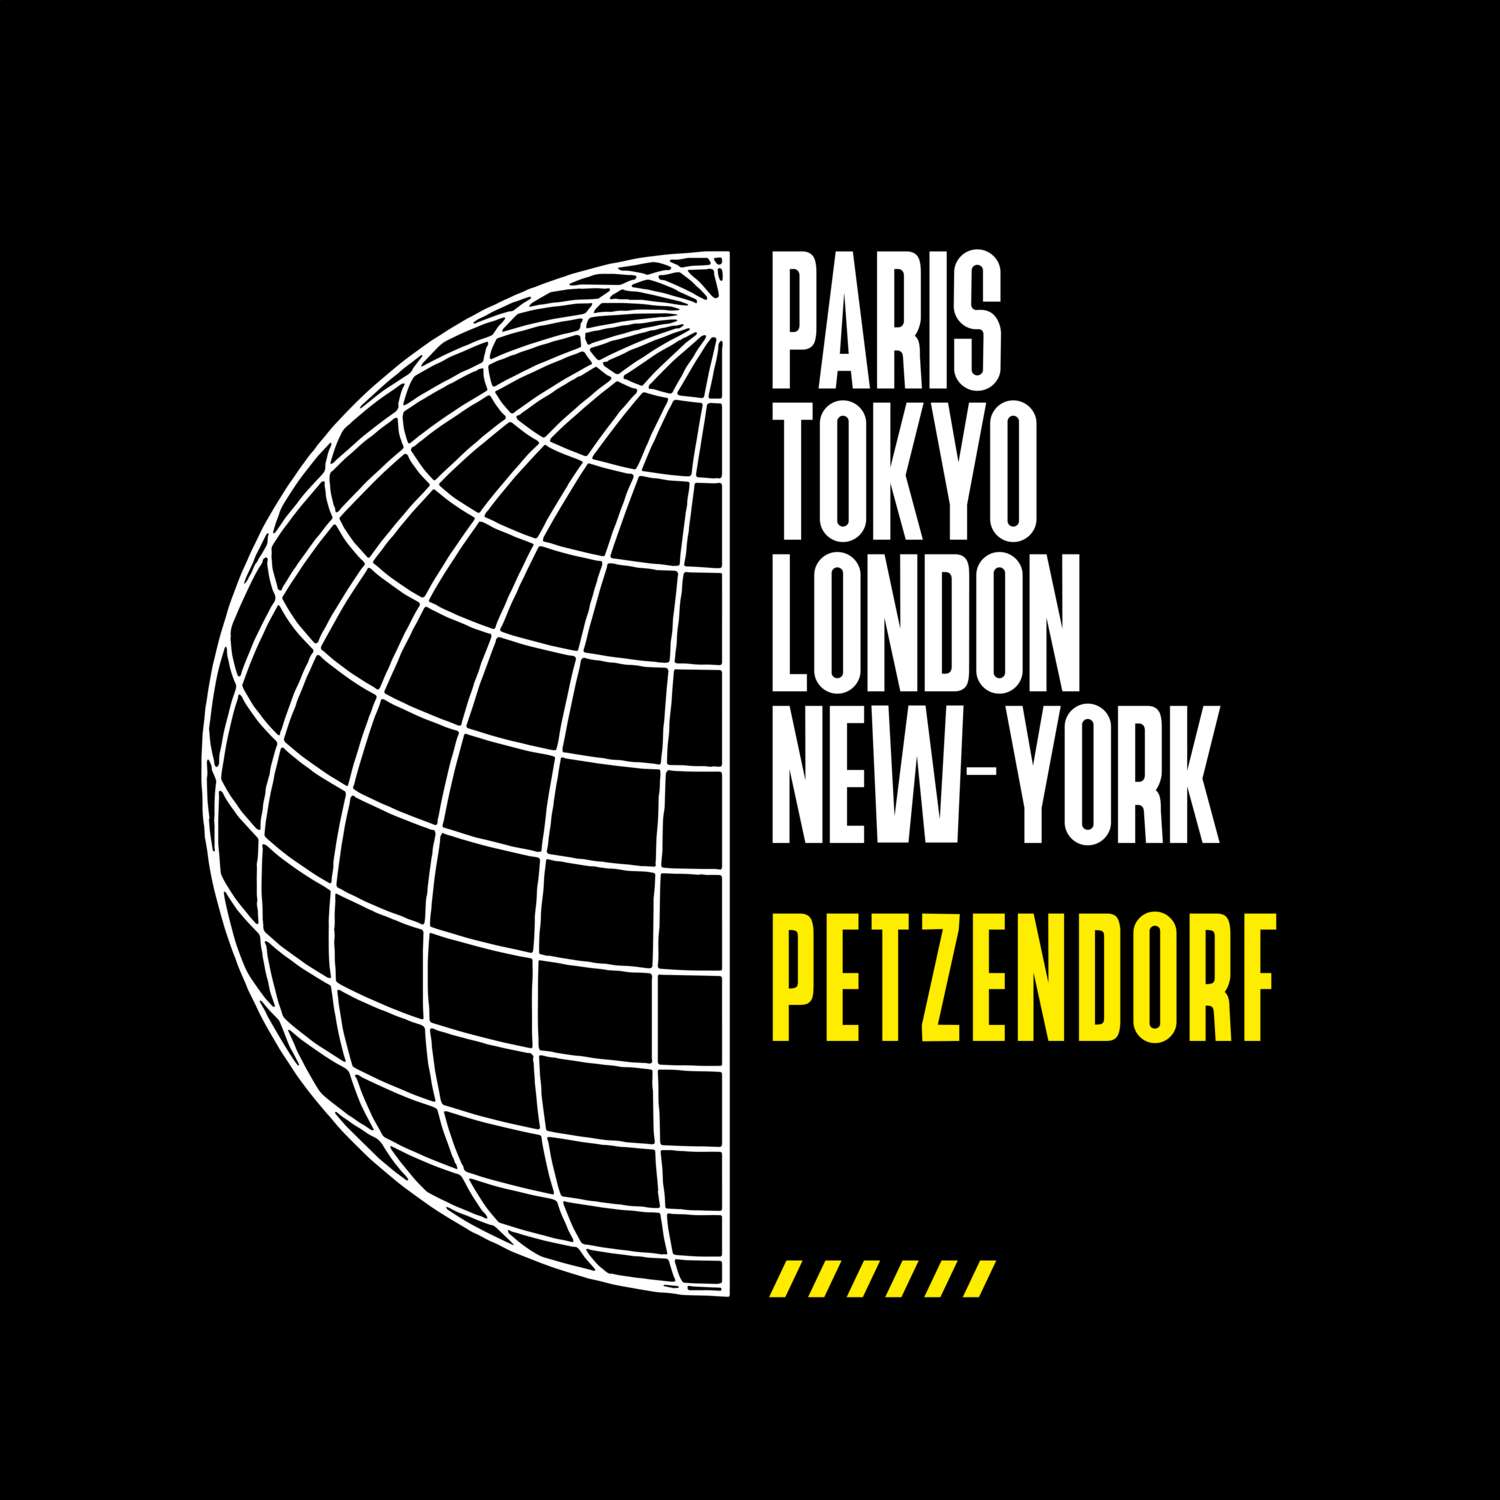 Petzendorf T-Shirt »Paris Tokyo London«